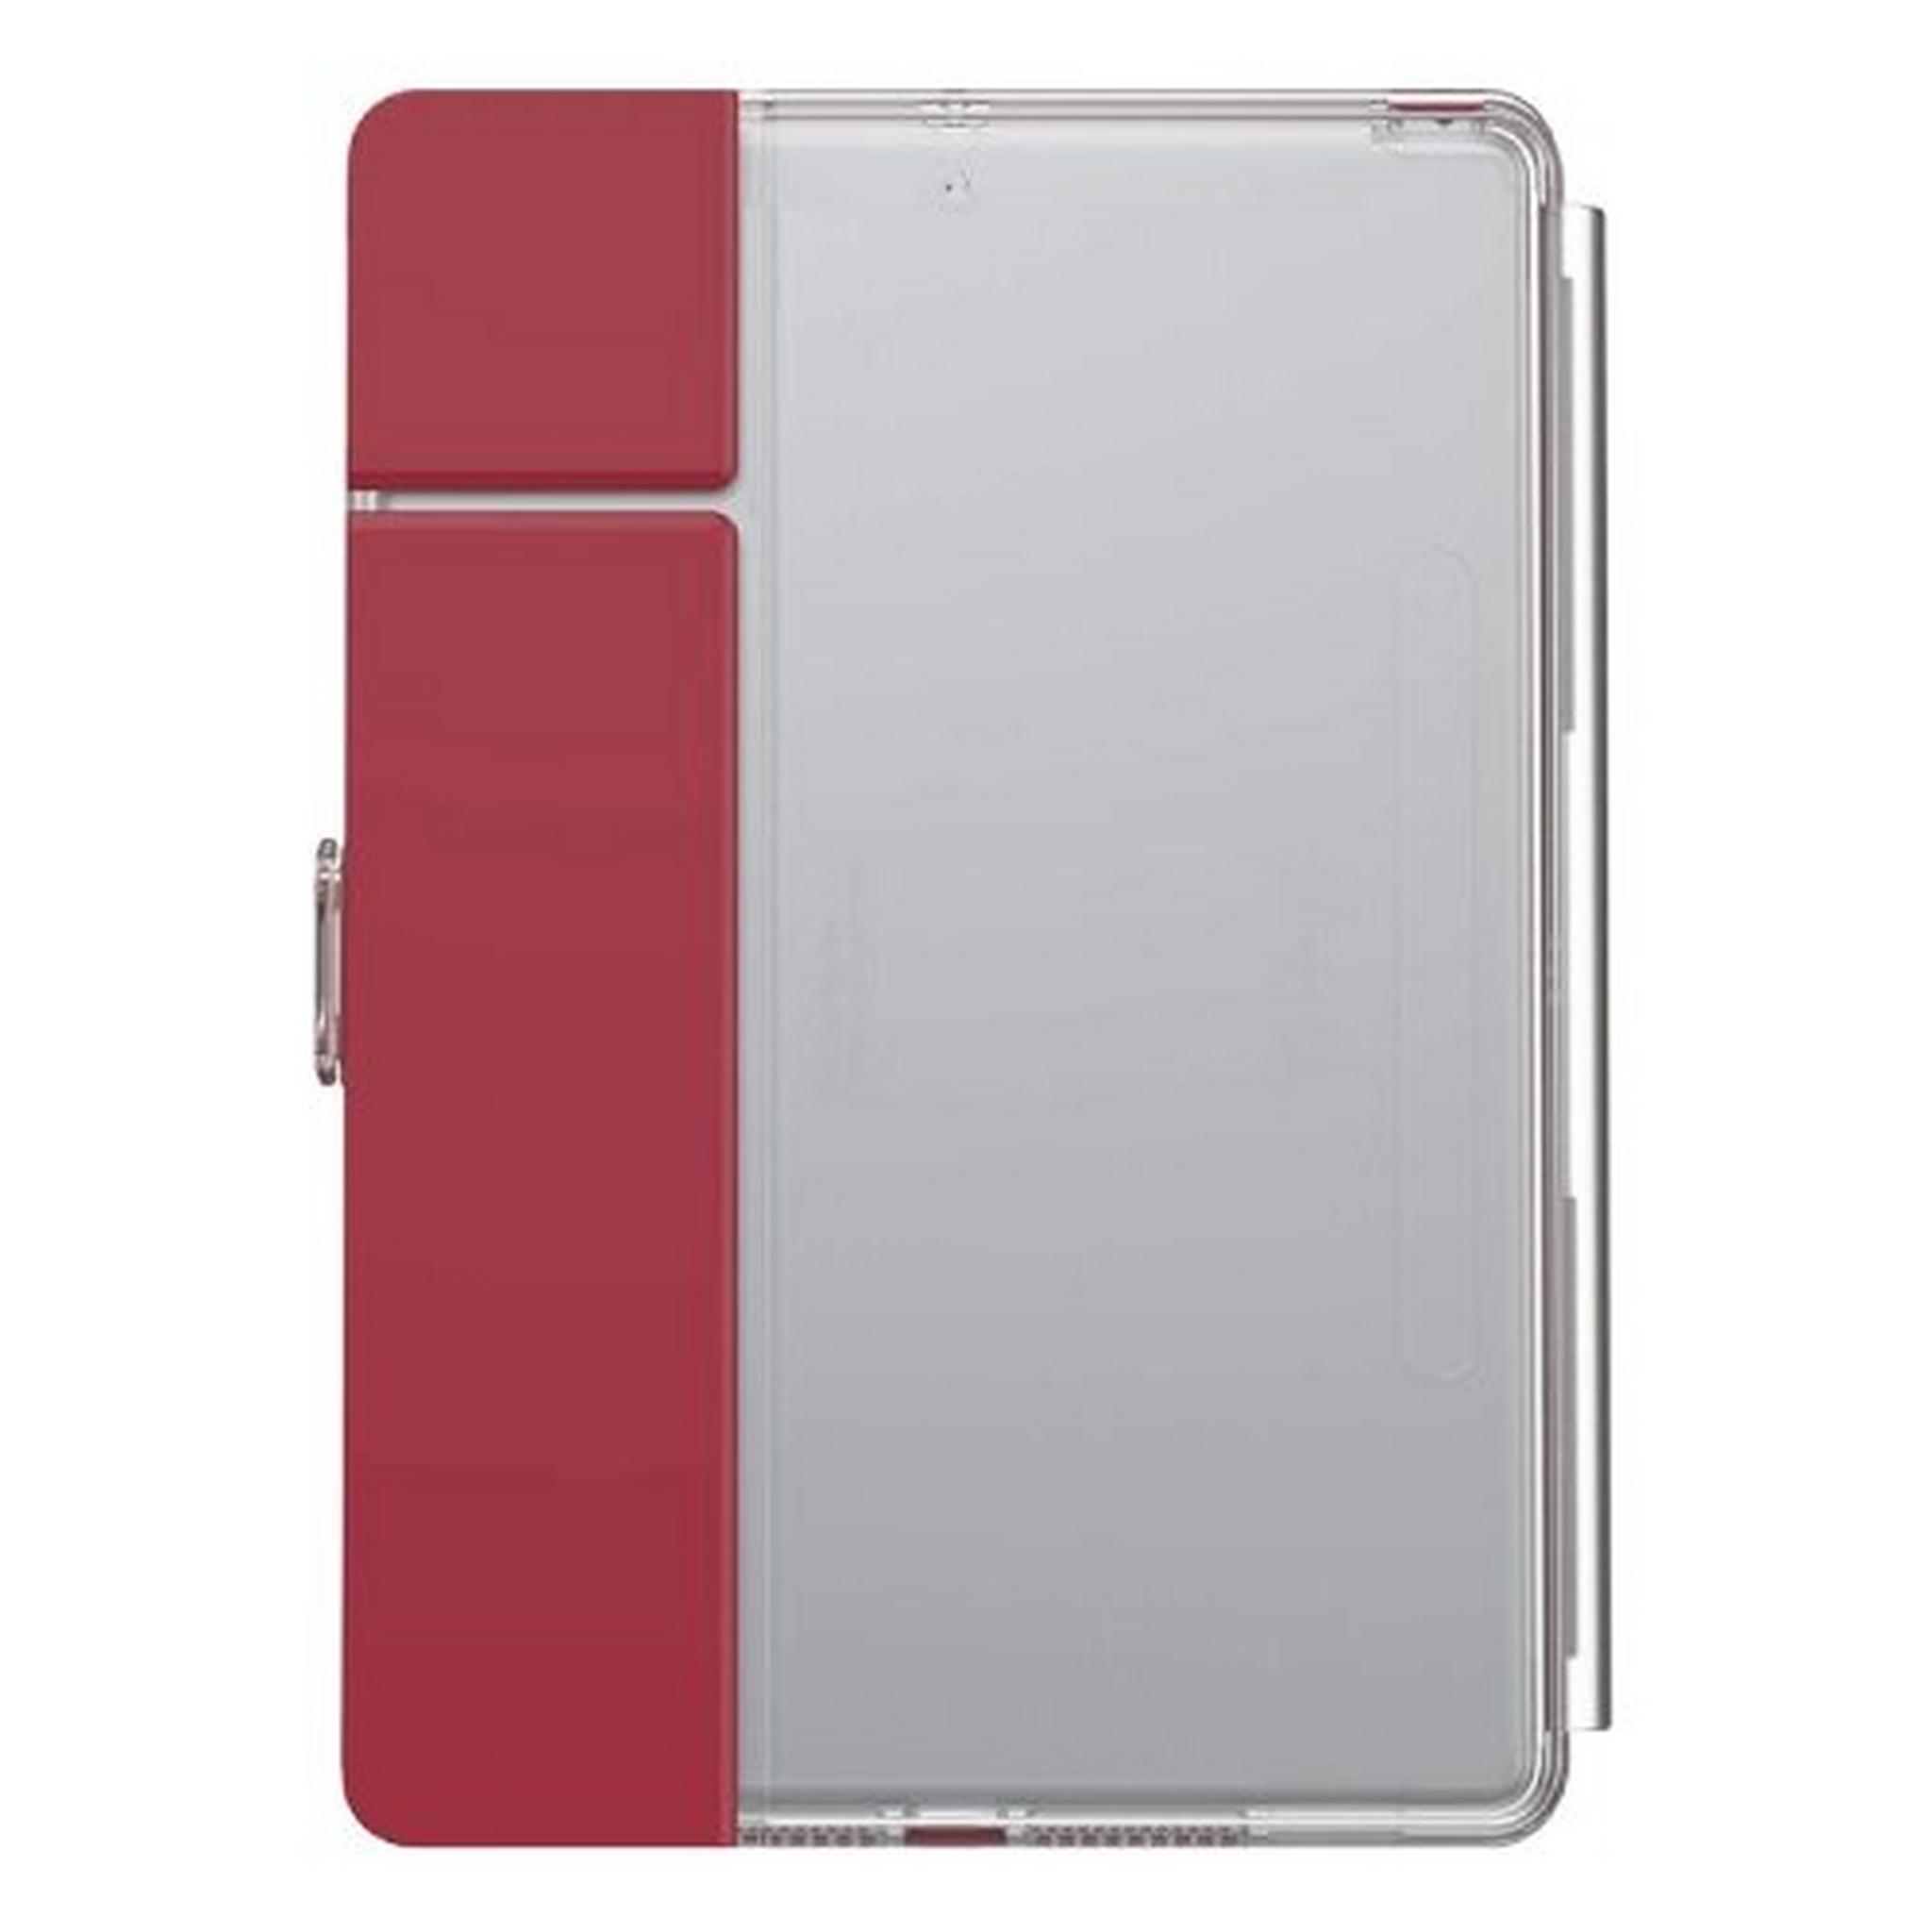 Speck Balance Folio 10.2-inch iPad Case - Red / Clear